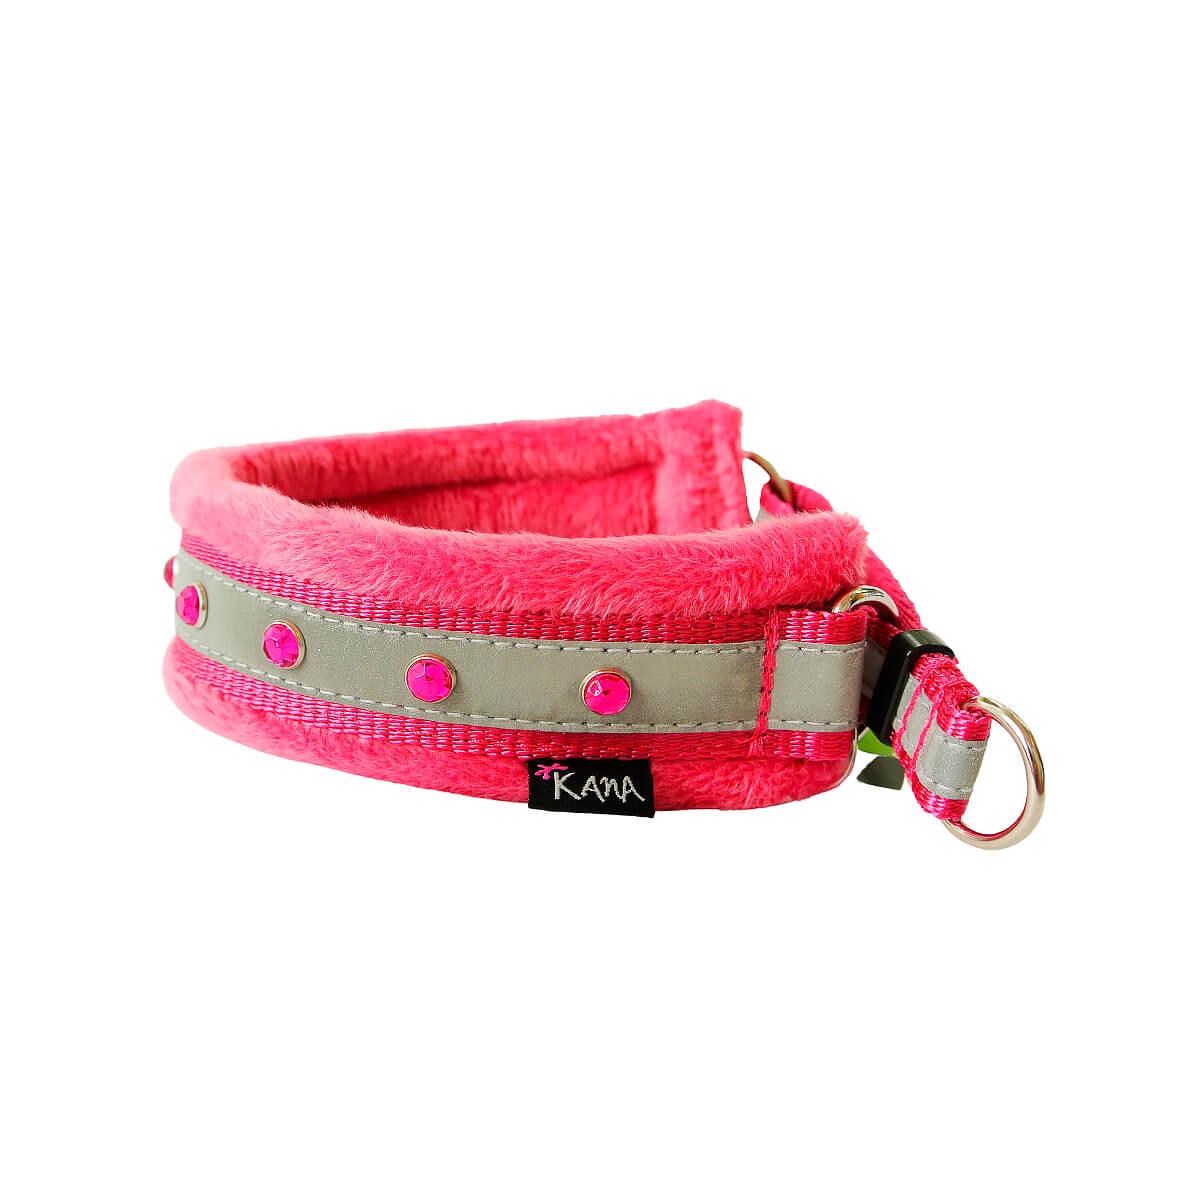 Kana Collection Dimangi koiran pinkki panta timanttikoristein.